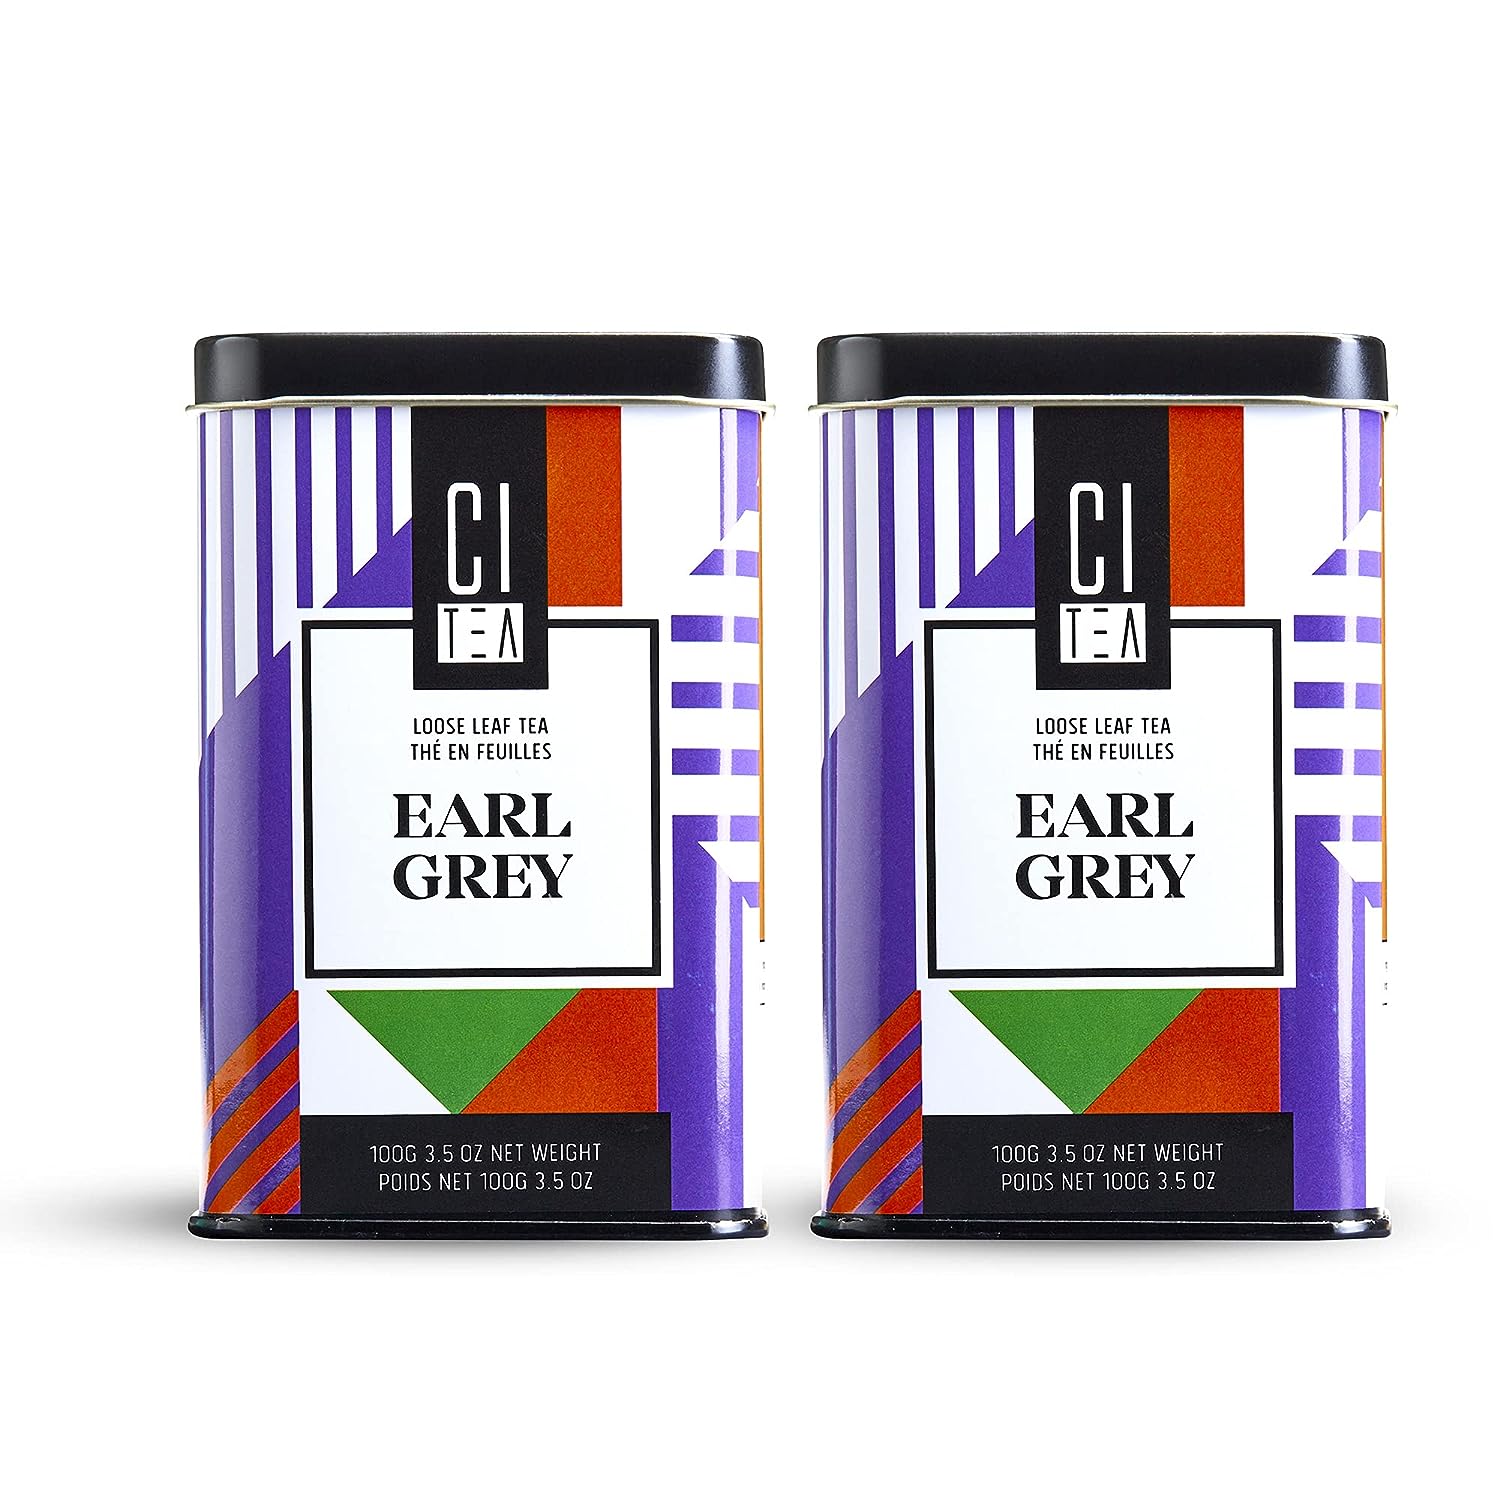 Citea - Earl Grey Loose Leaf Tea, Premium Black Tea With Bergamot Extract, Pure Leaf Tea in Tin Cans, 2 Pack